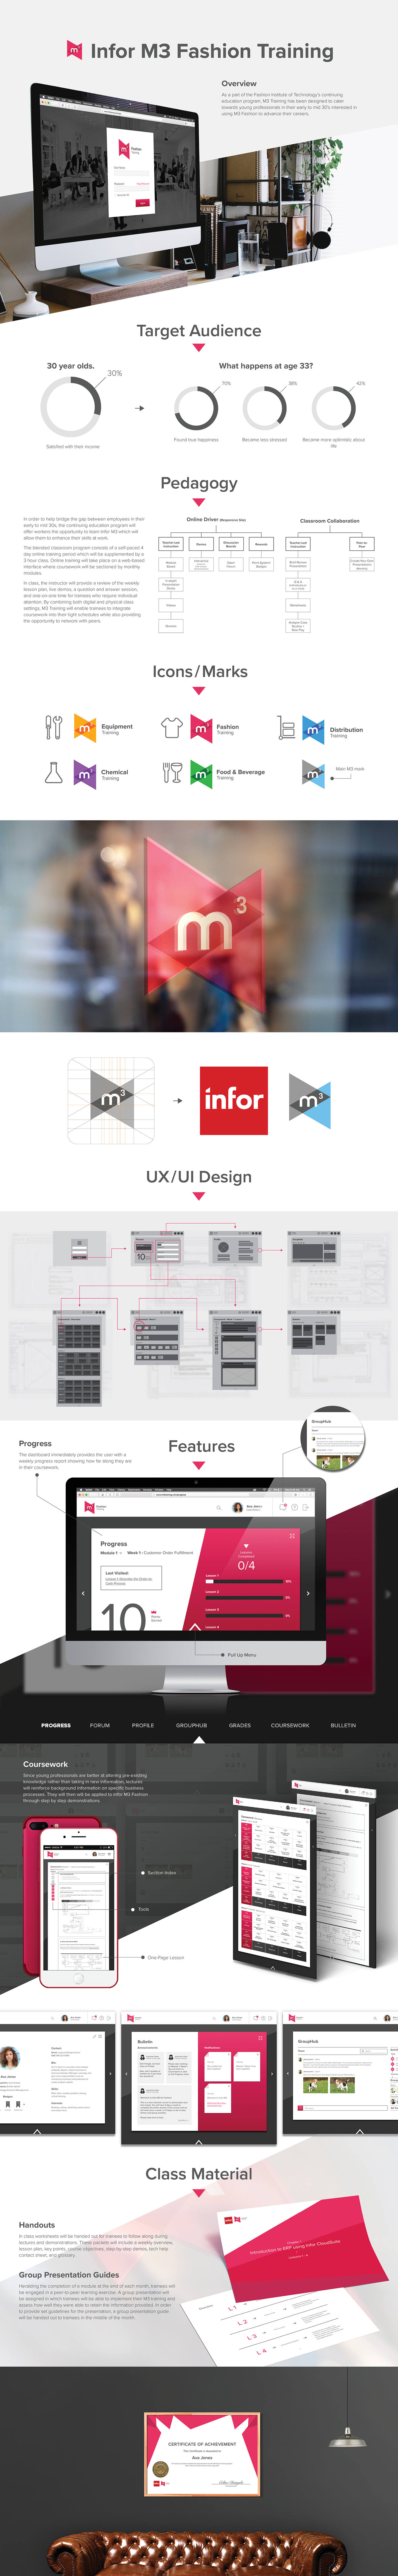 ux/ui user experience user interface Web Design  infor software training M3 branding  ux UI